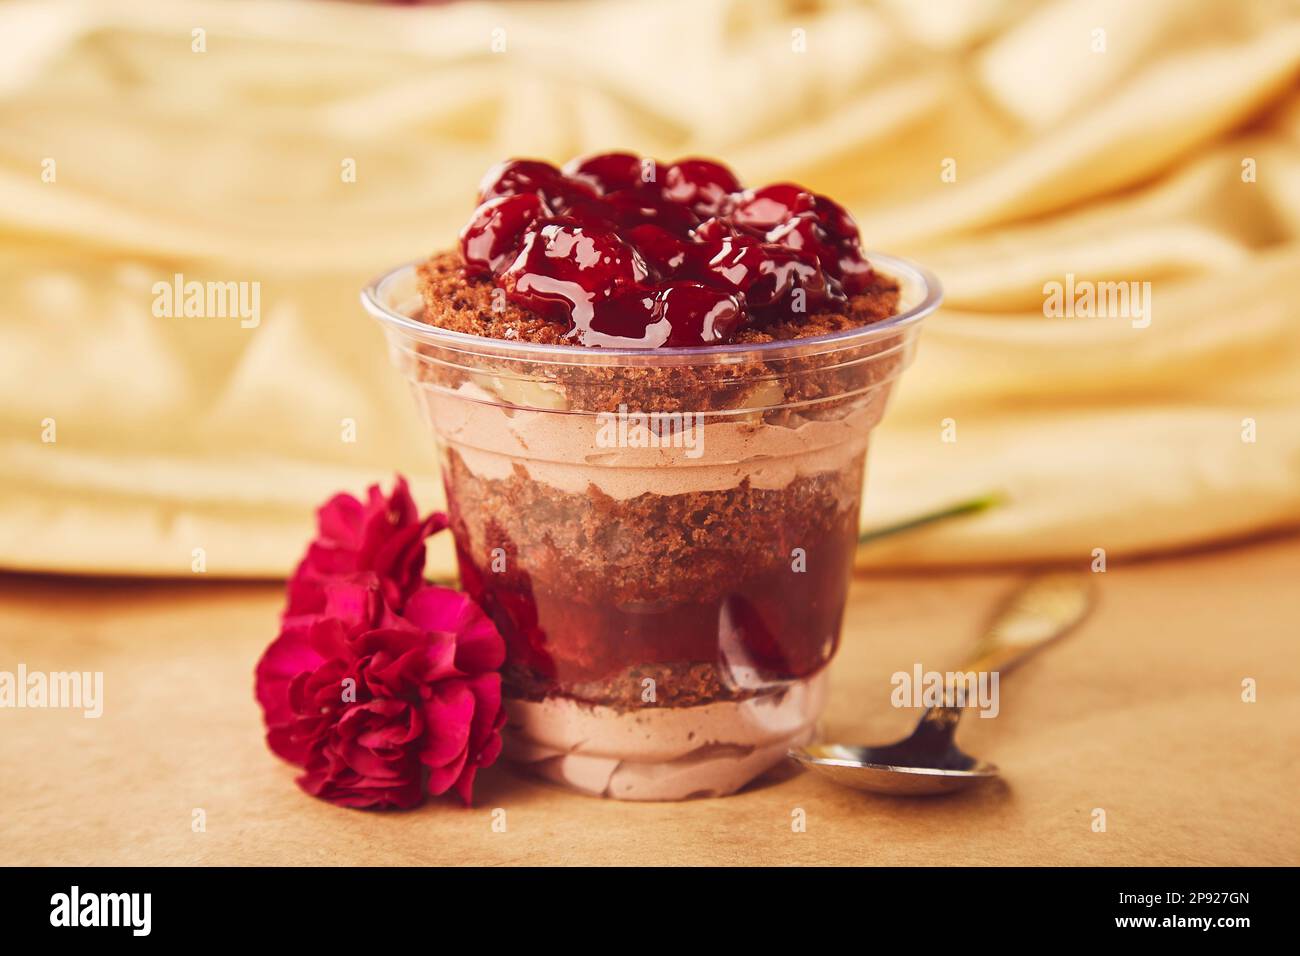 Dreamy Escapism Dessert - Natural sugar free, vegan, healthy layered dessert with fresh cherry. Stock Photo